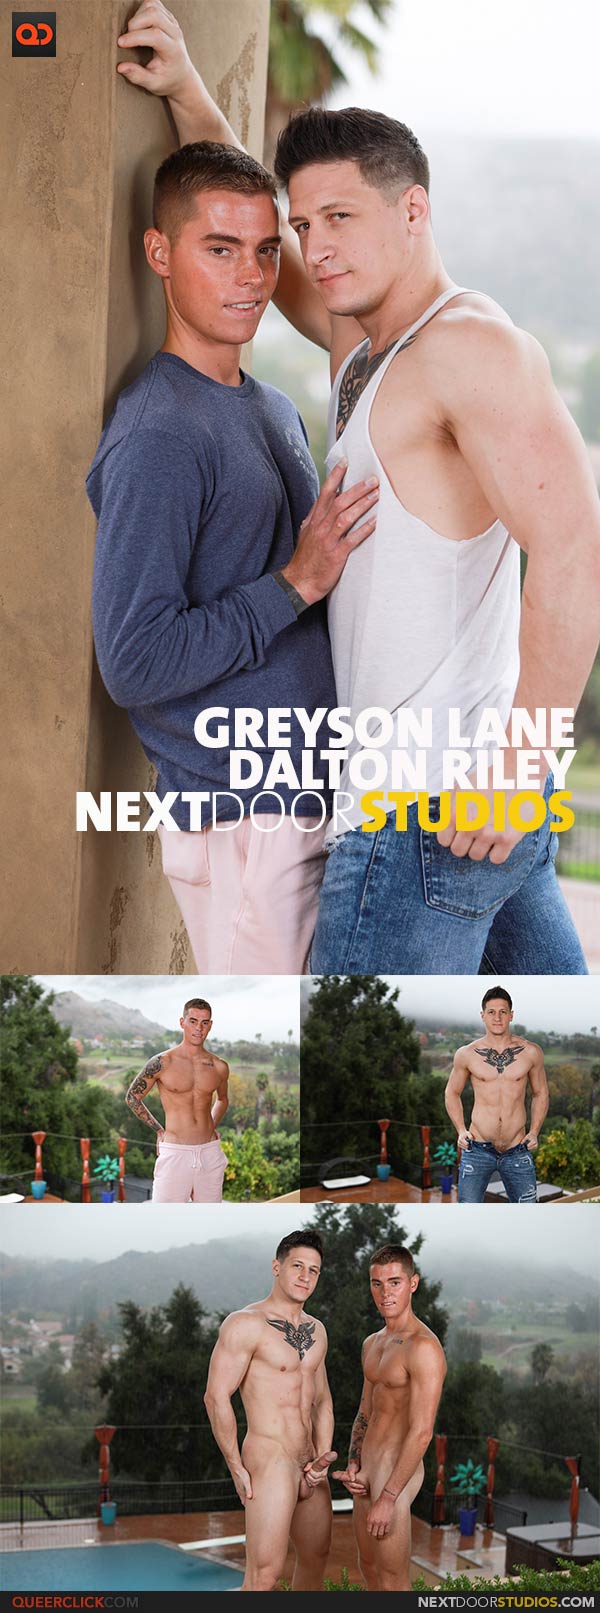 NextDoorStudios: Dalton Riley and Greyson Lane